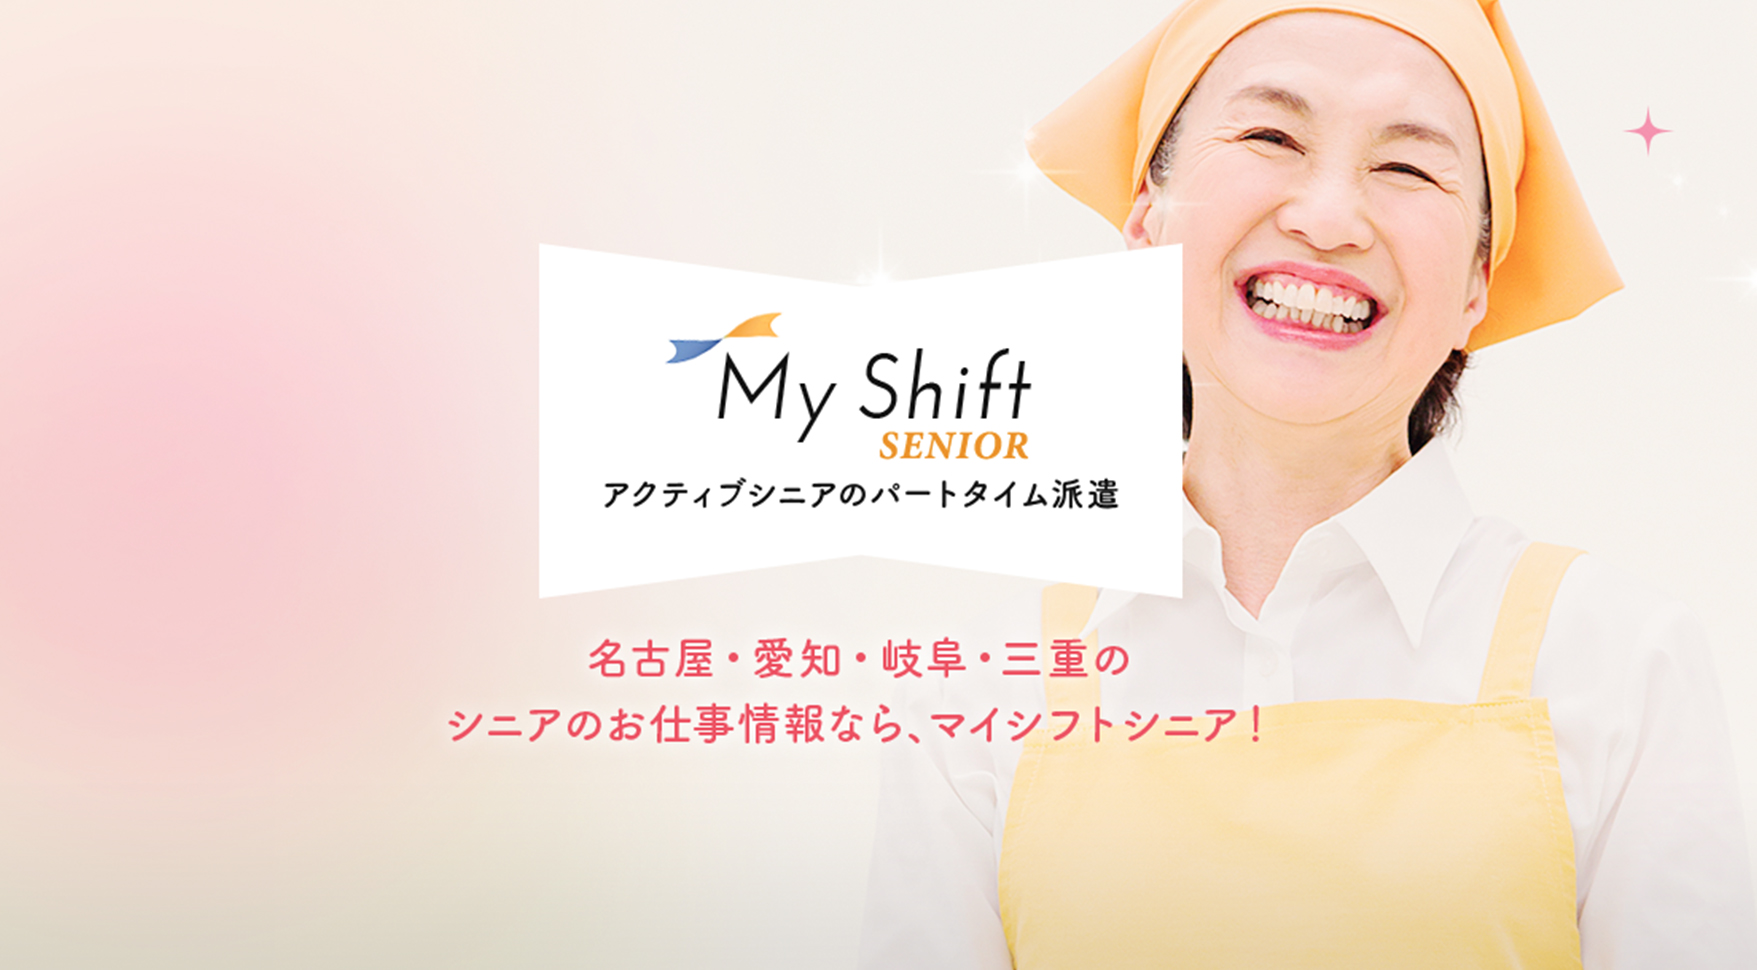 My Shift SENIOR（エンプロ株式会社）